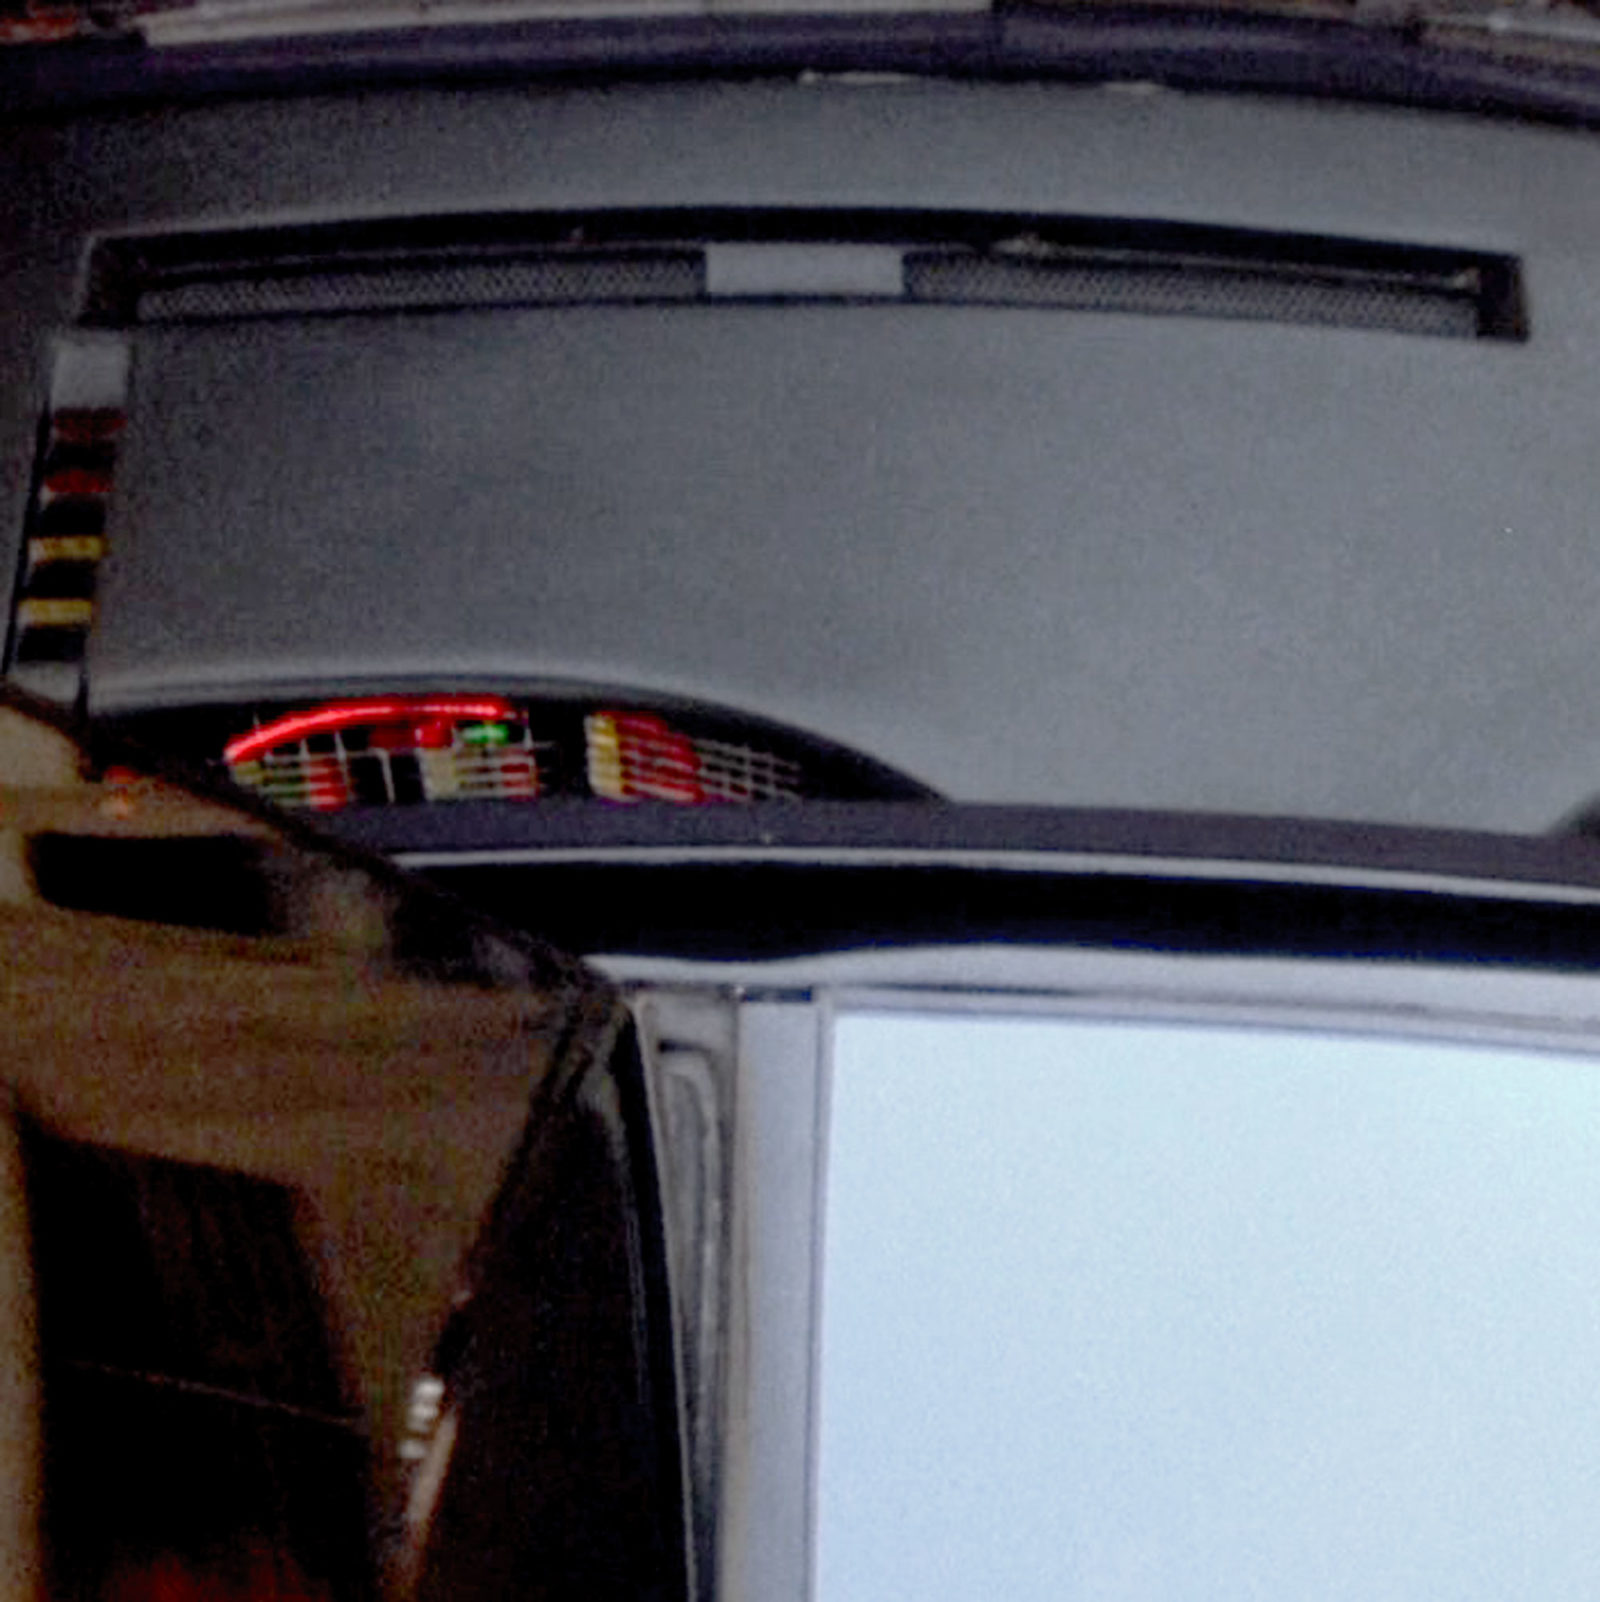 Dashboard Grilles seen in original Knight Rider KITT